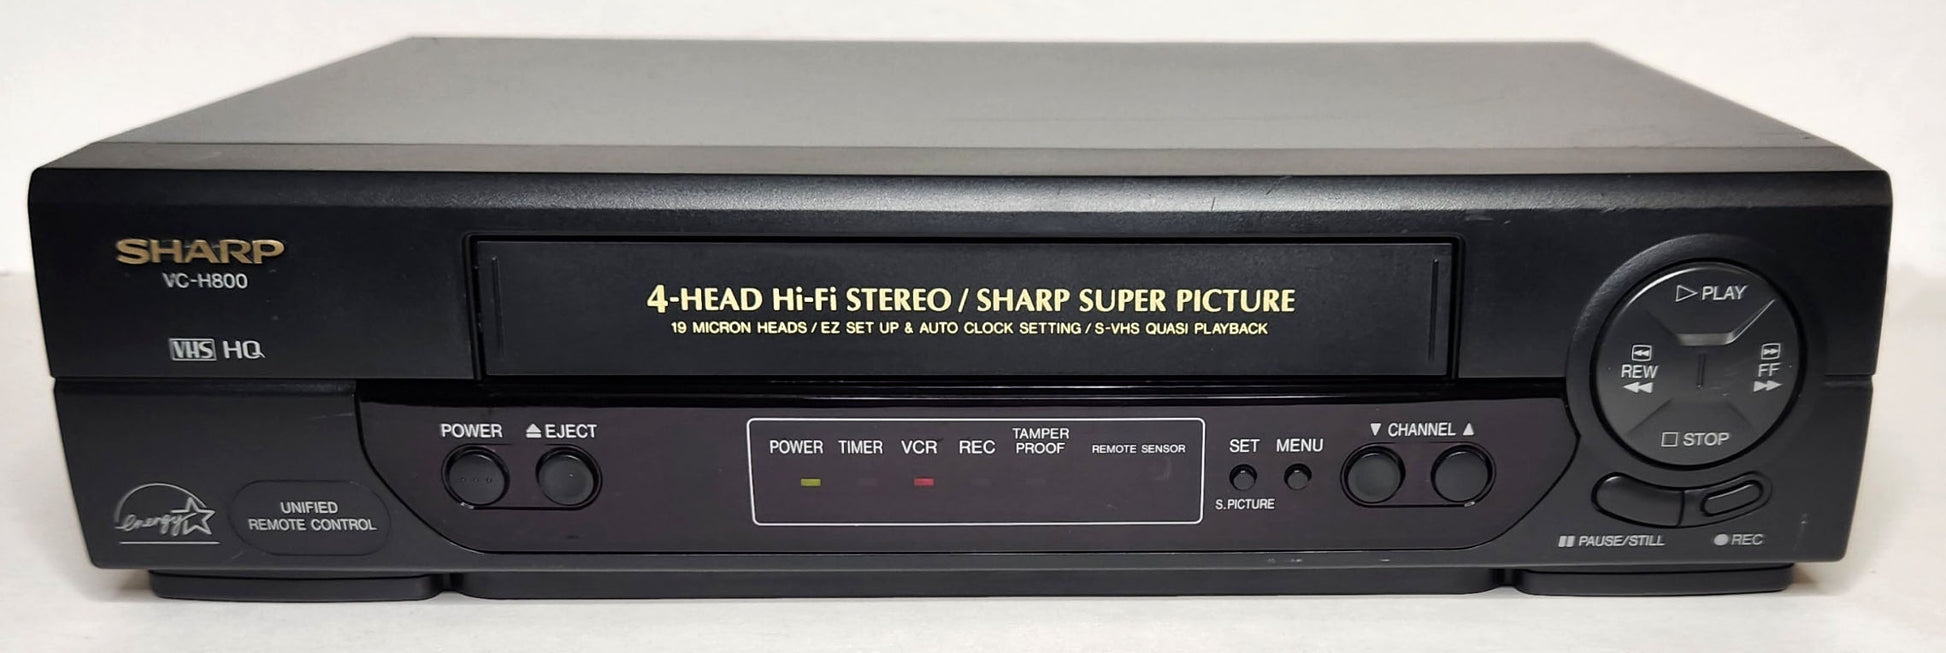 Sharp VC-H800U VCR, 4-Head Hi-Fi Stereo - Front